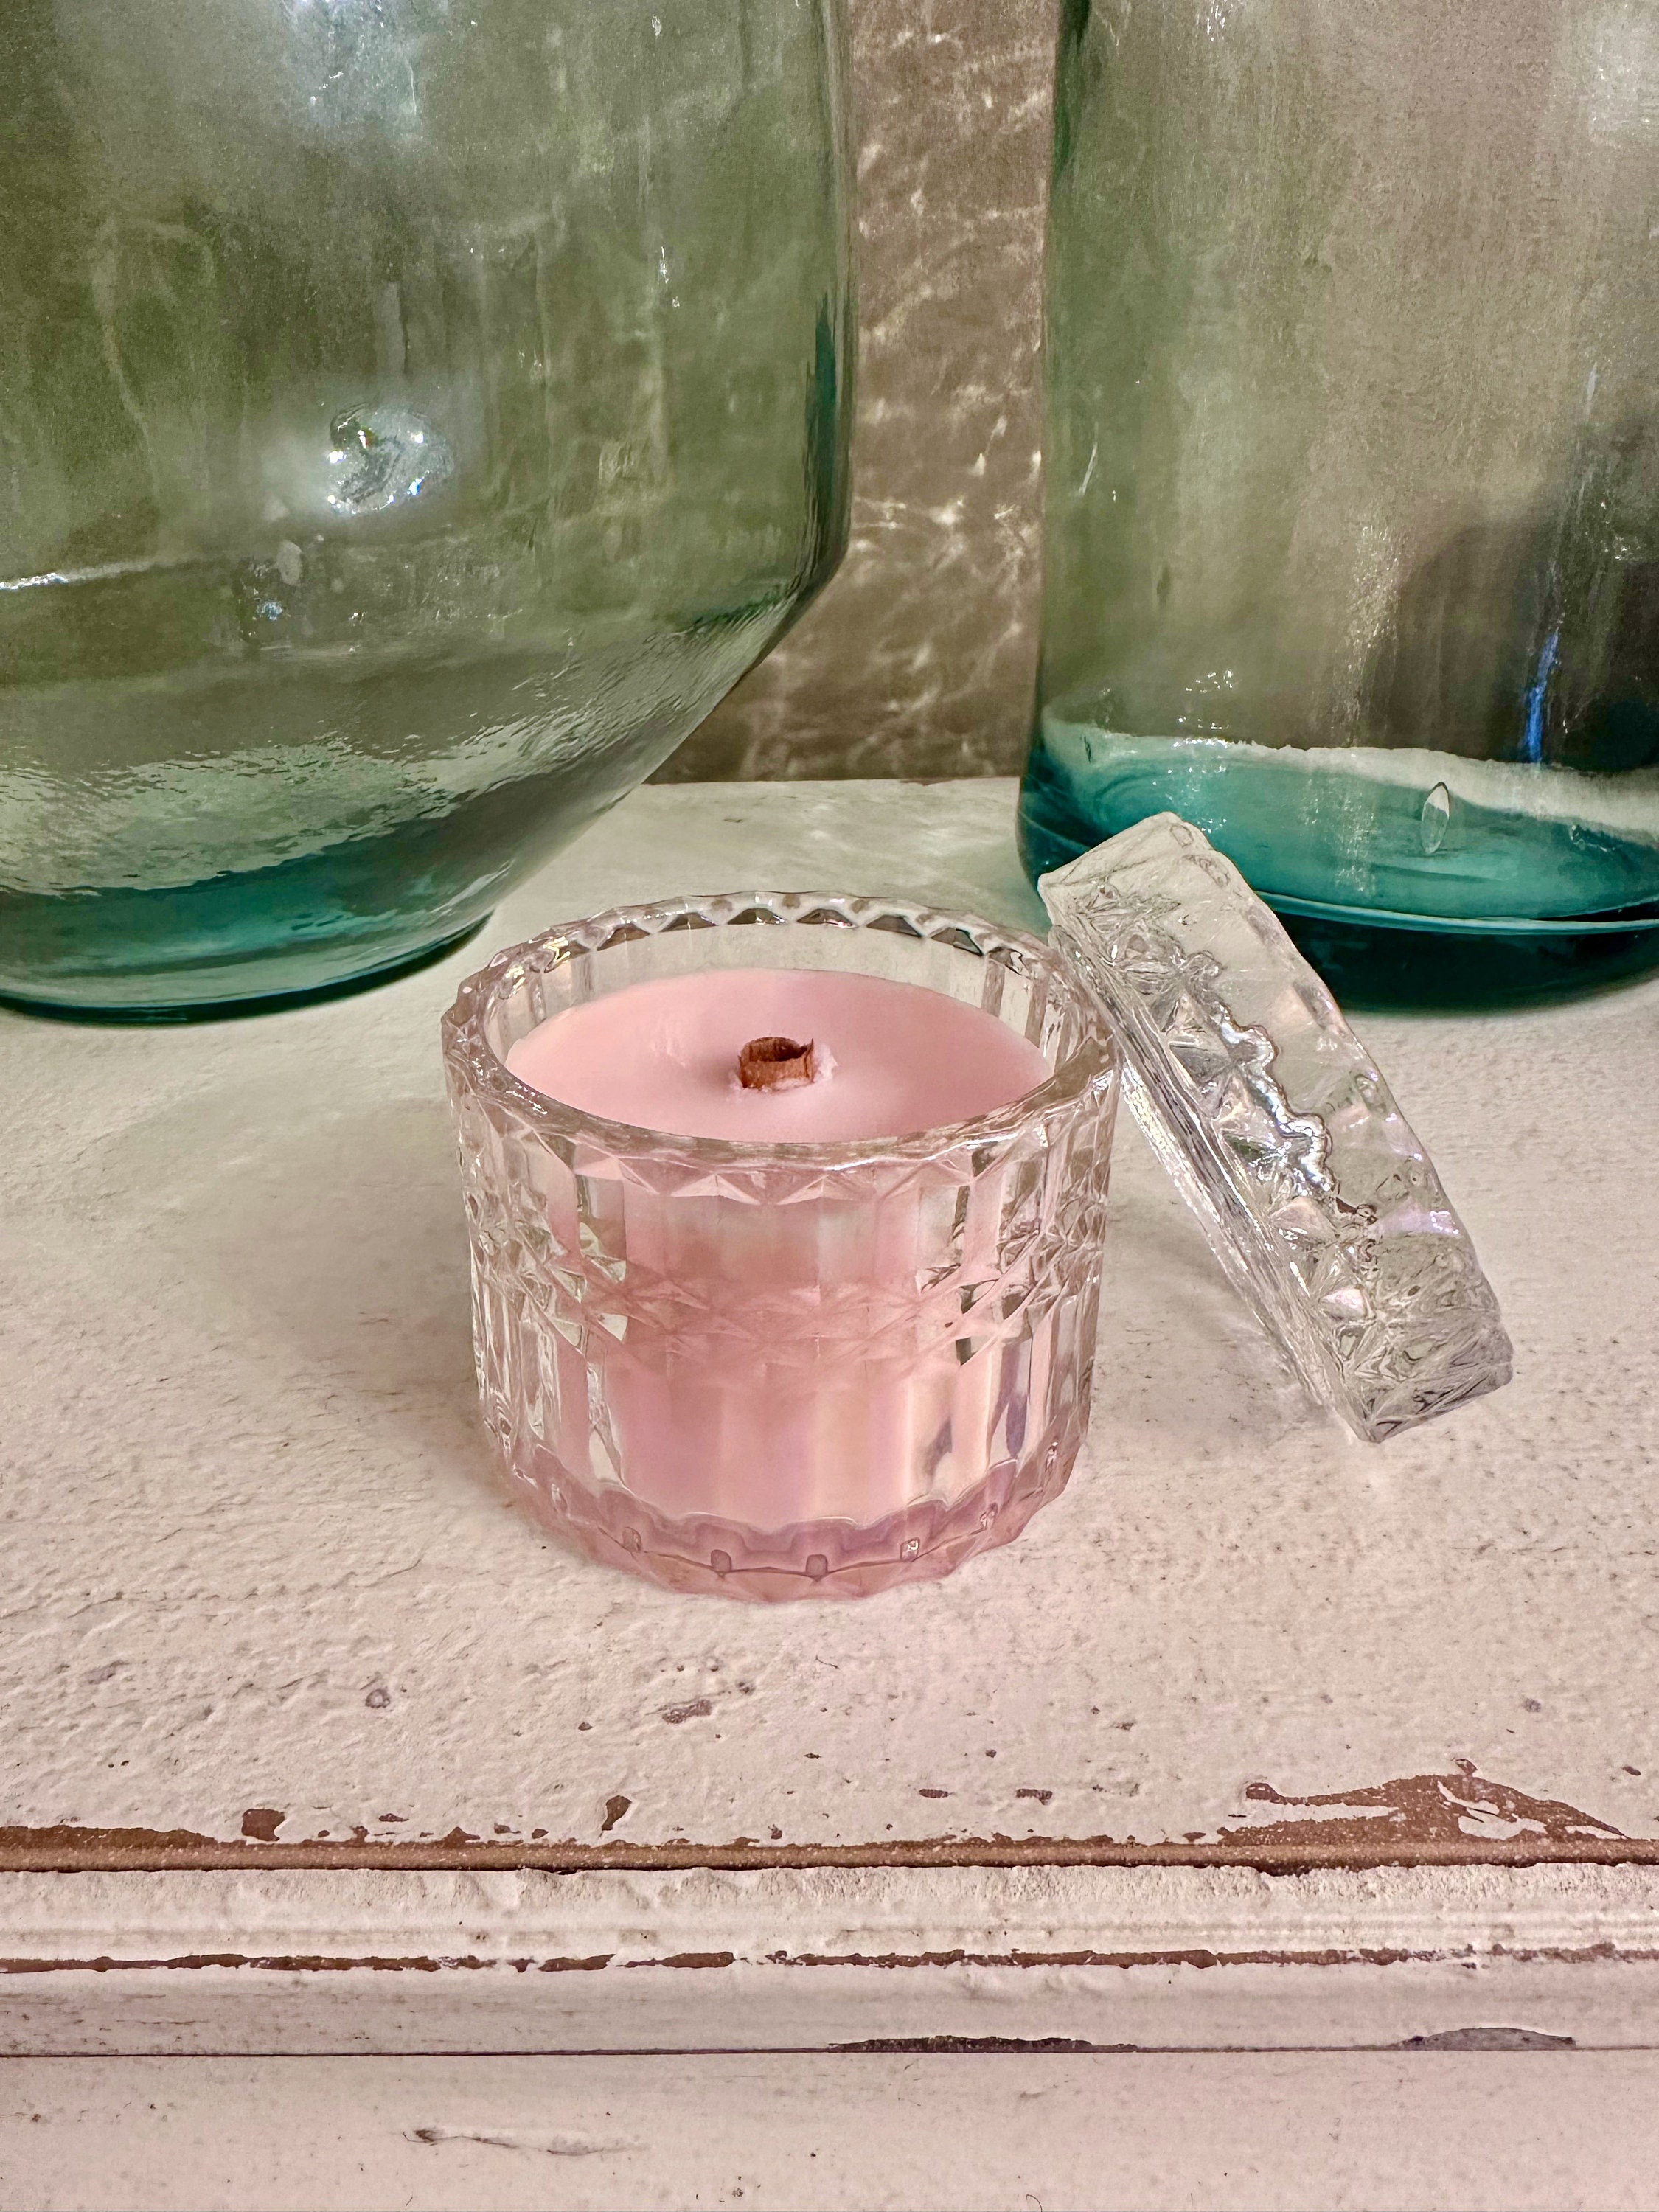 Wholesale Glass Spice Jar- 6oz- 3 Assortments GREEN PURPLE PINK